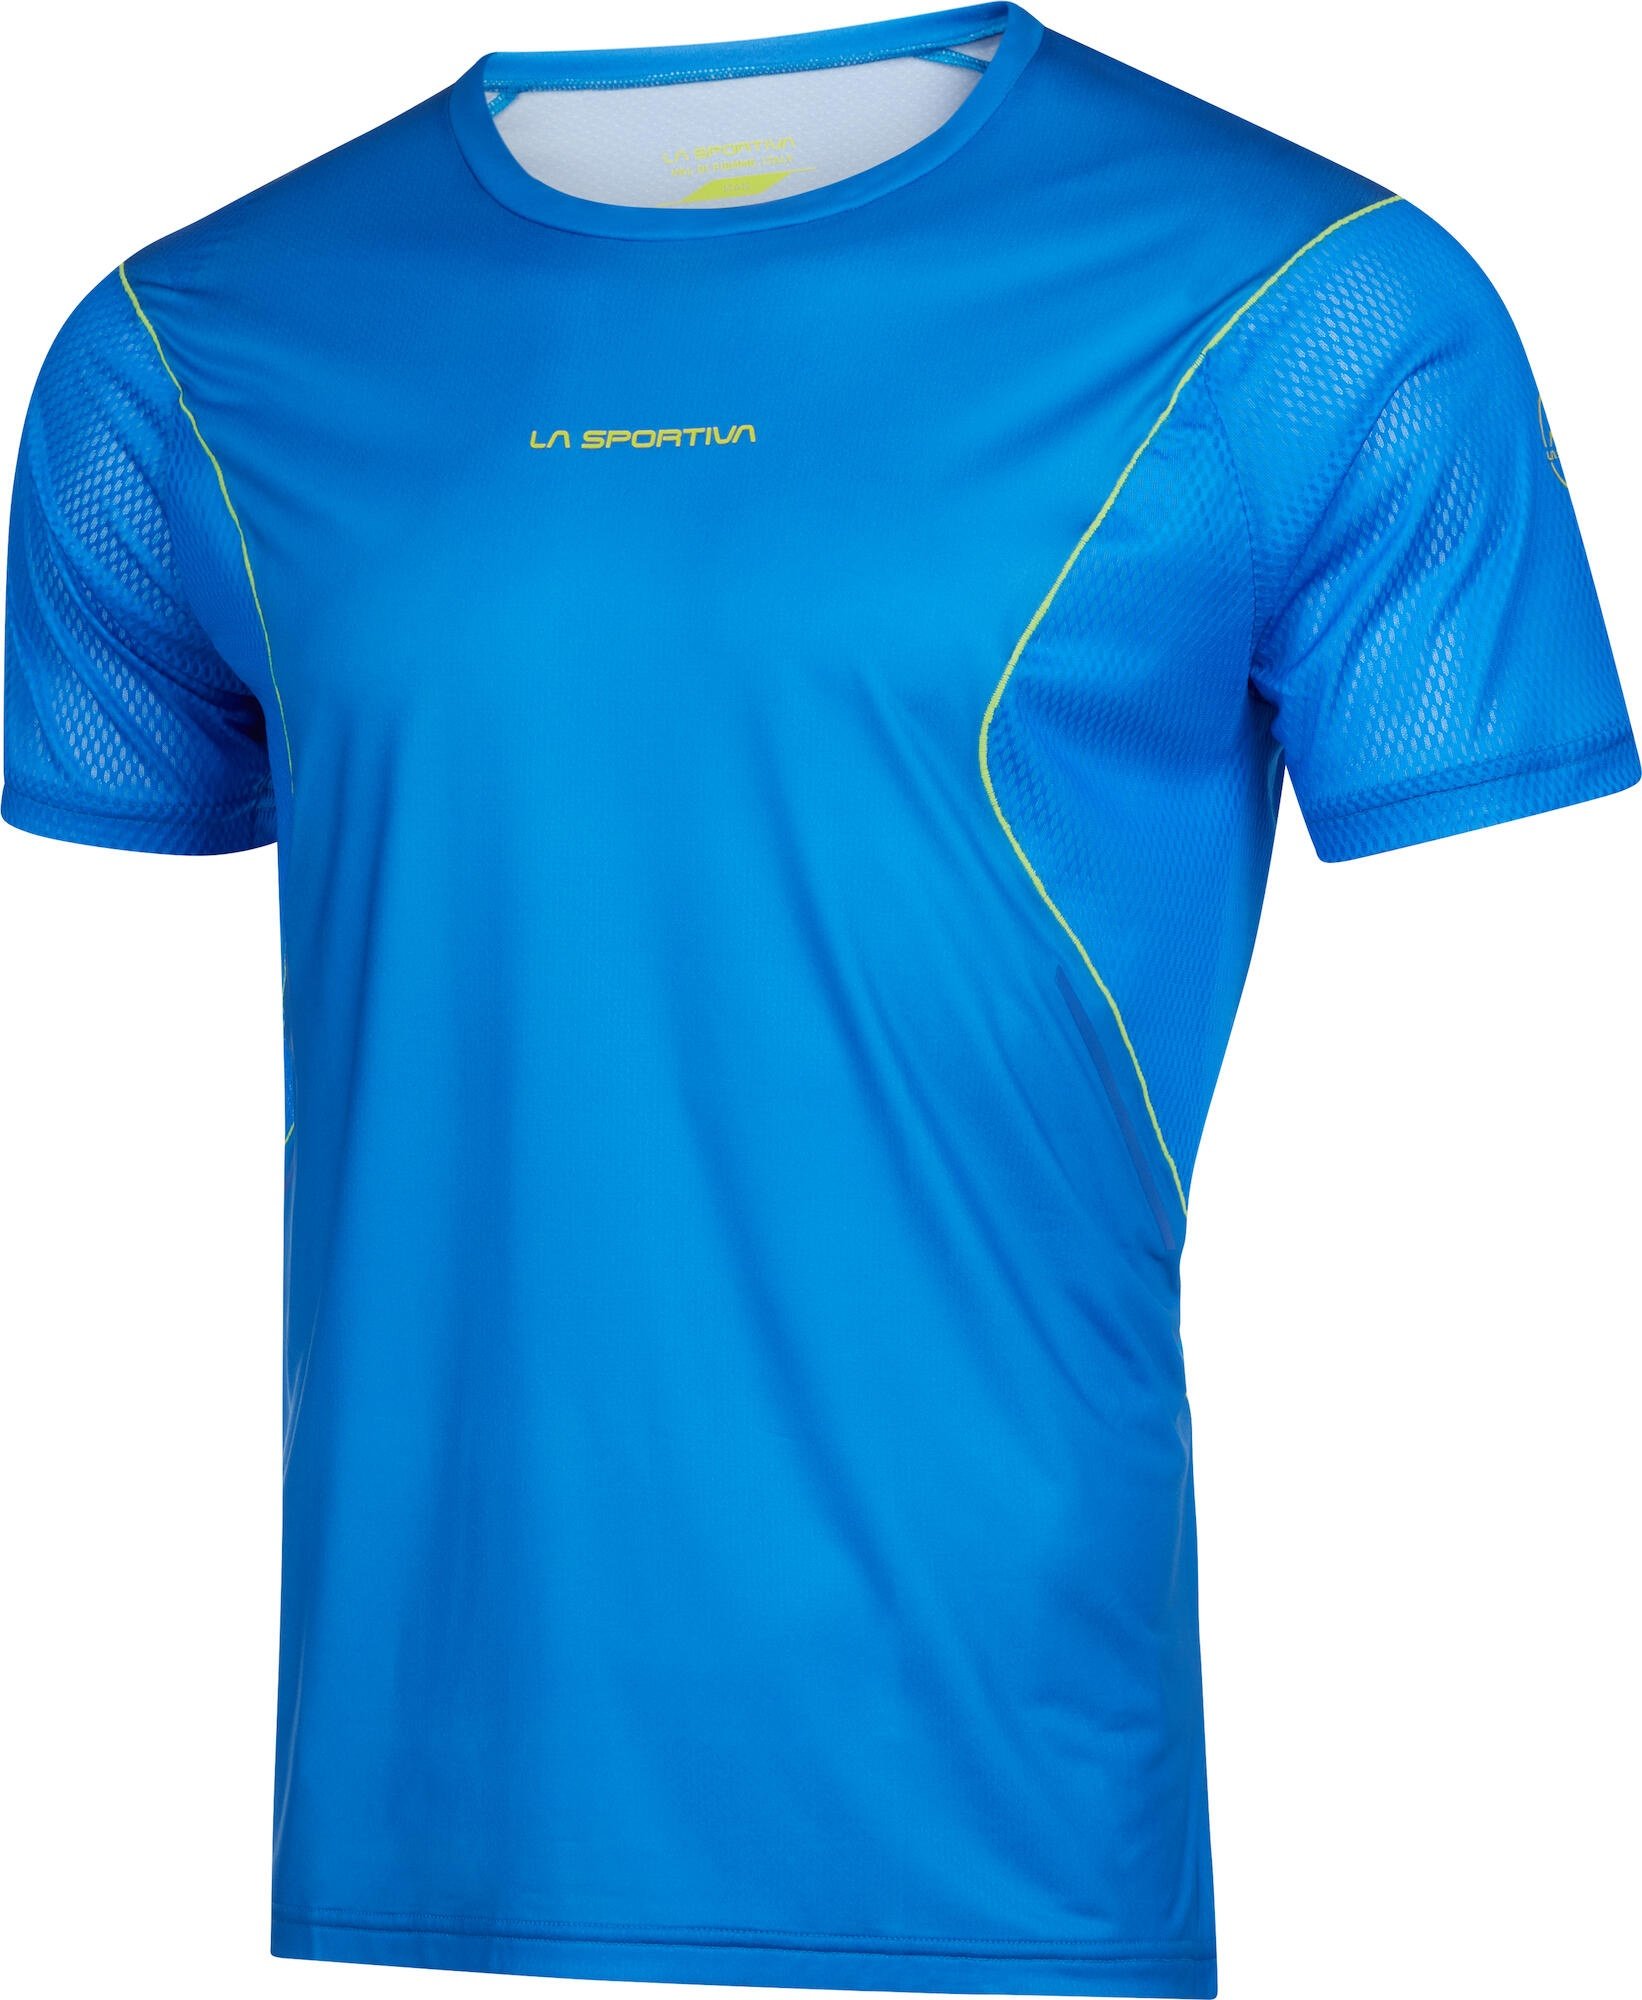 La Sportiva Resolute T-shirt Men electric blue (634634) M